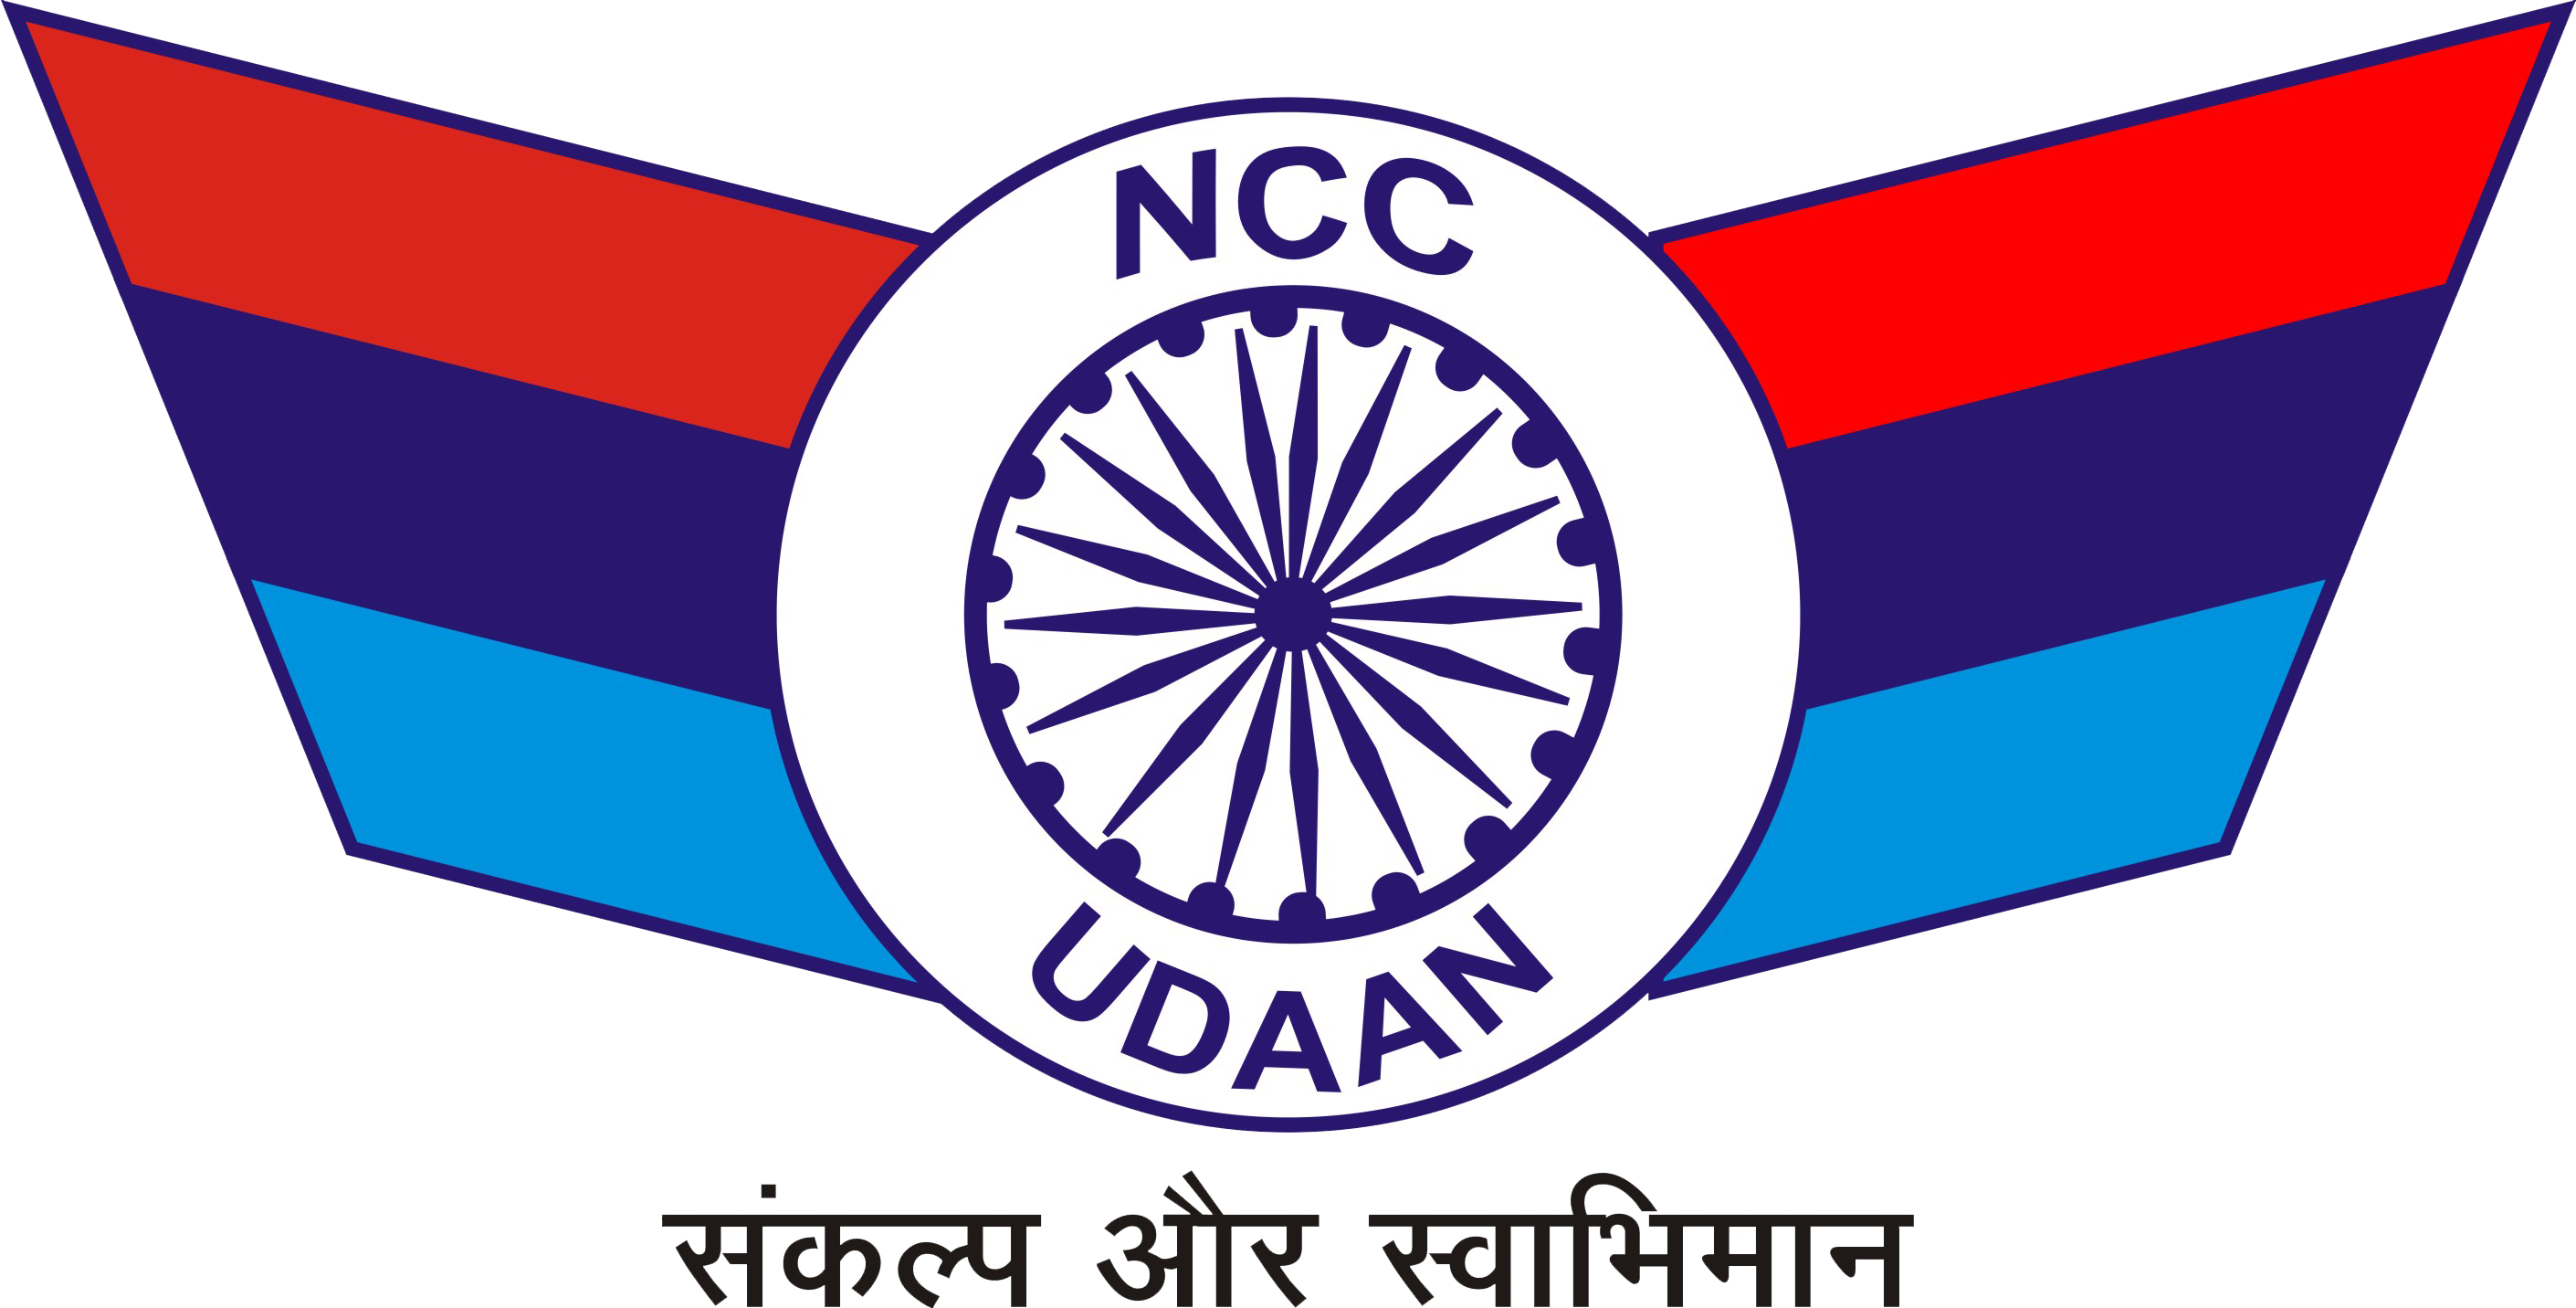 NCC Udaan